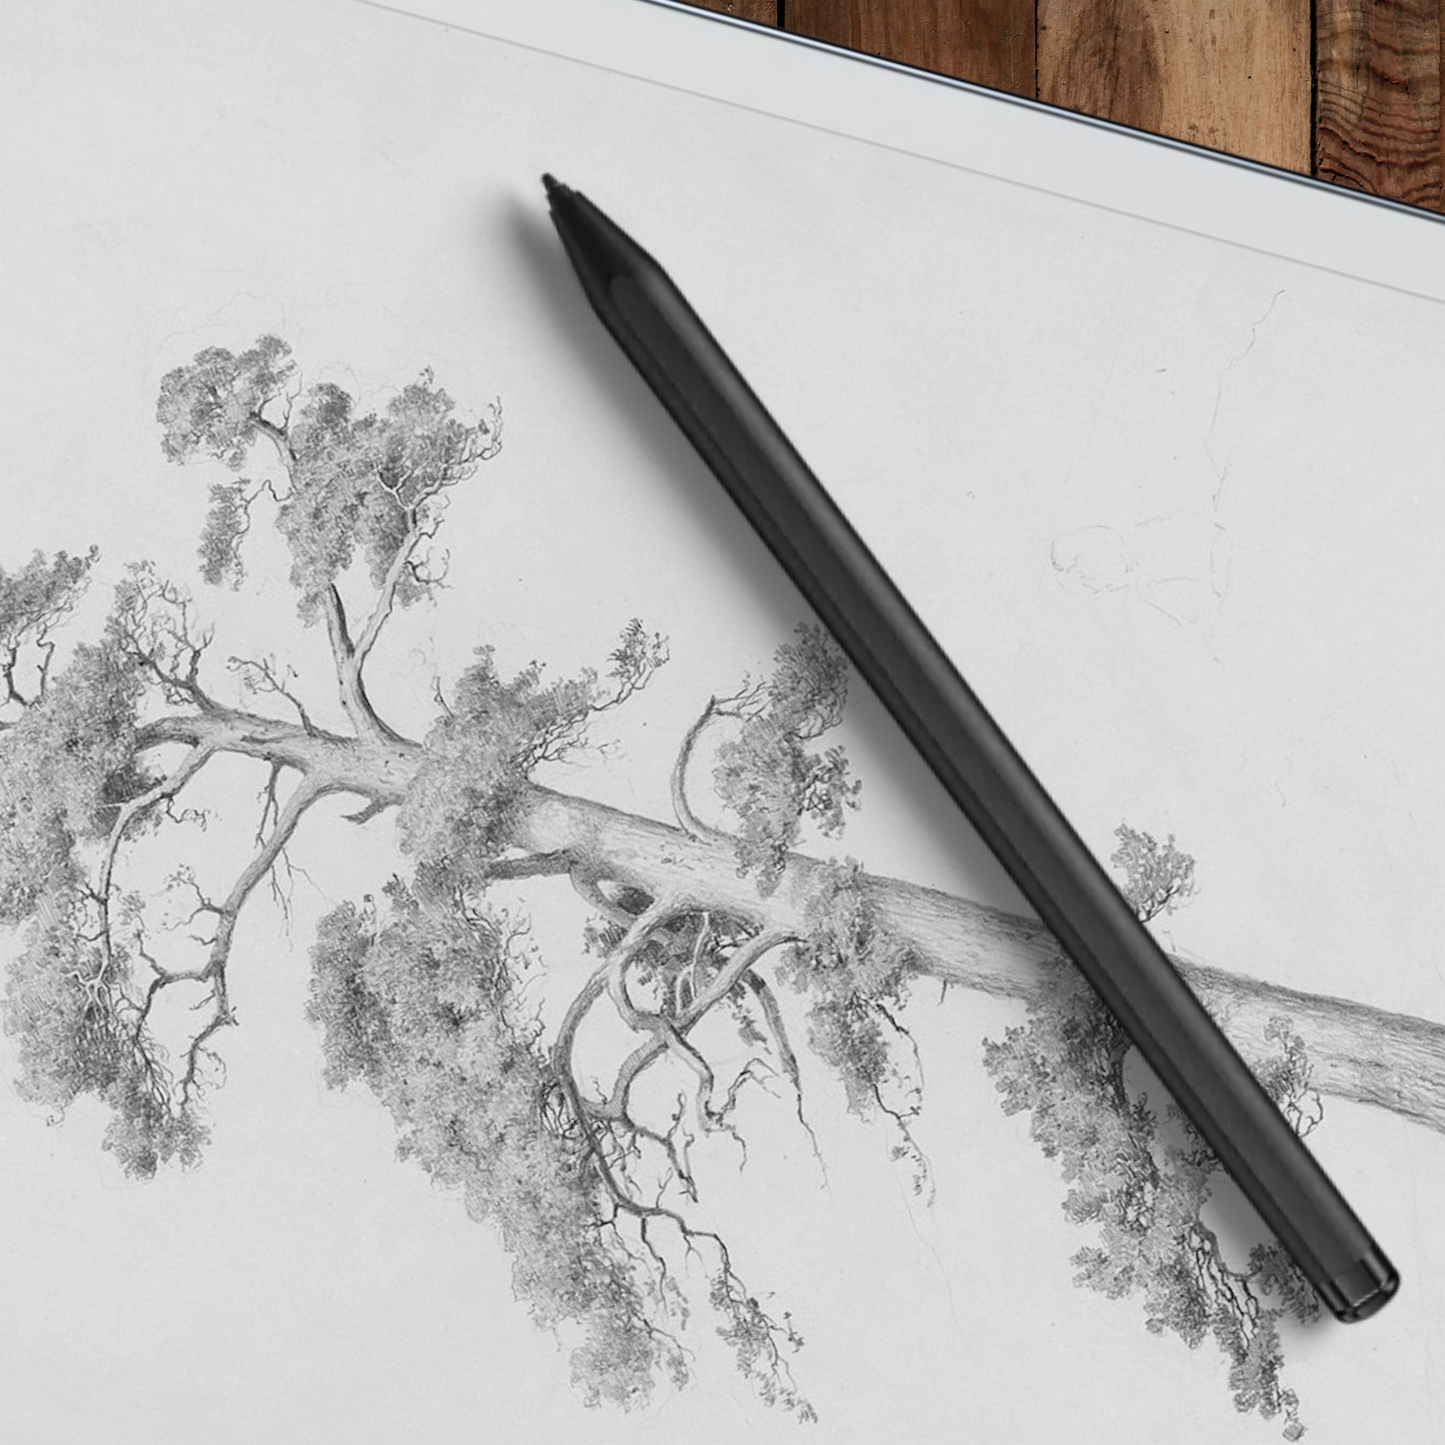 Remarkable 2 Sleep Screen & Notebook Cover Artwork - Inspirational Hand-Drawn Foliage Art